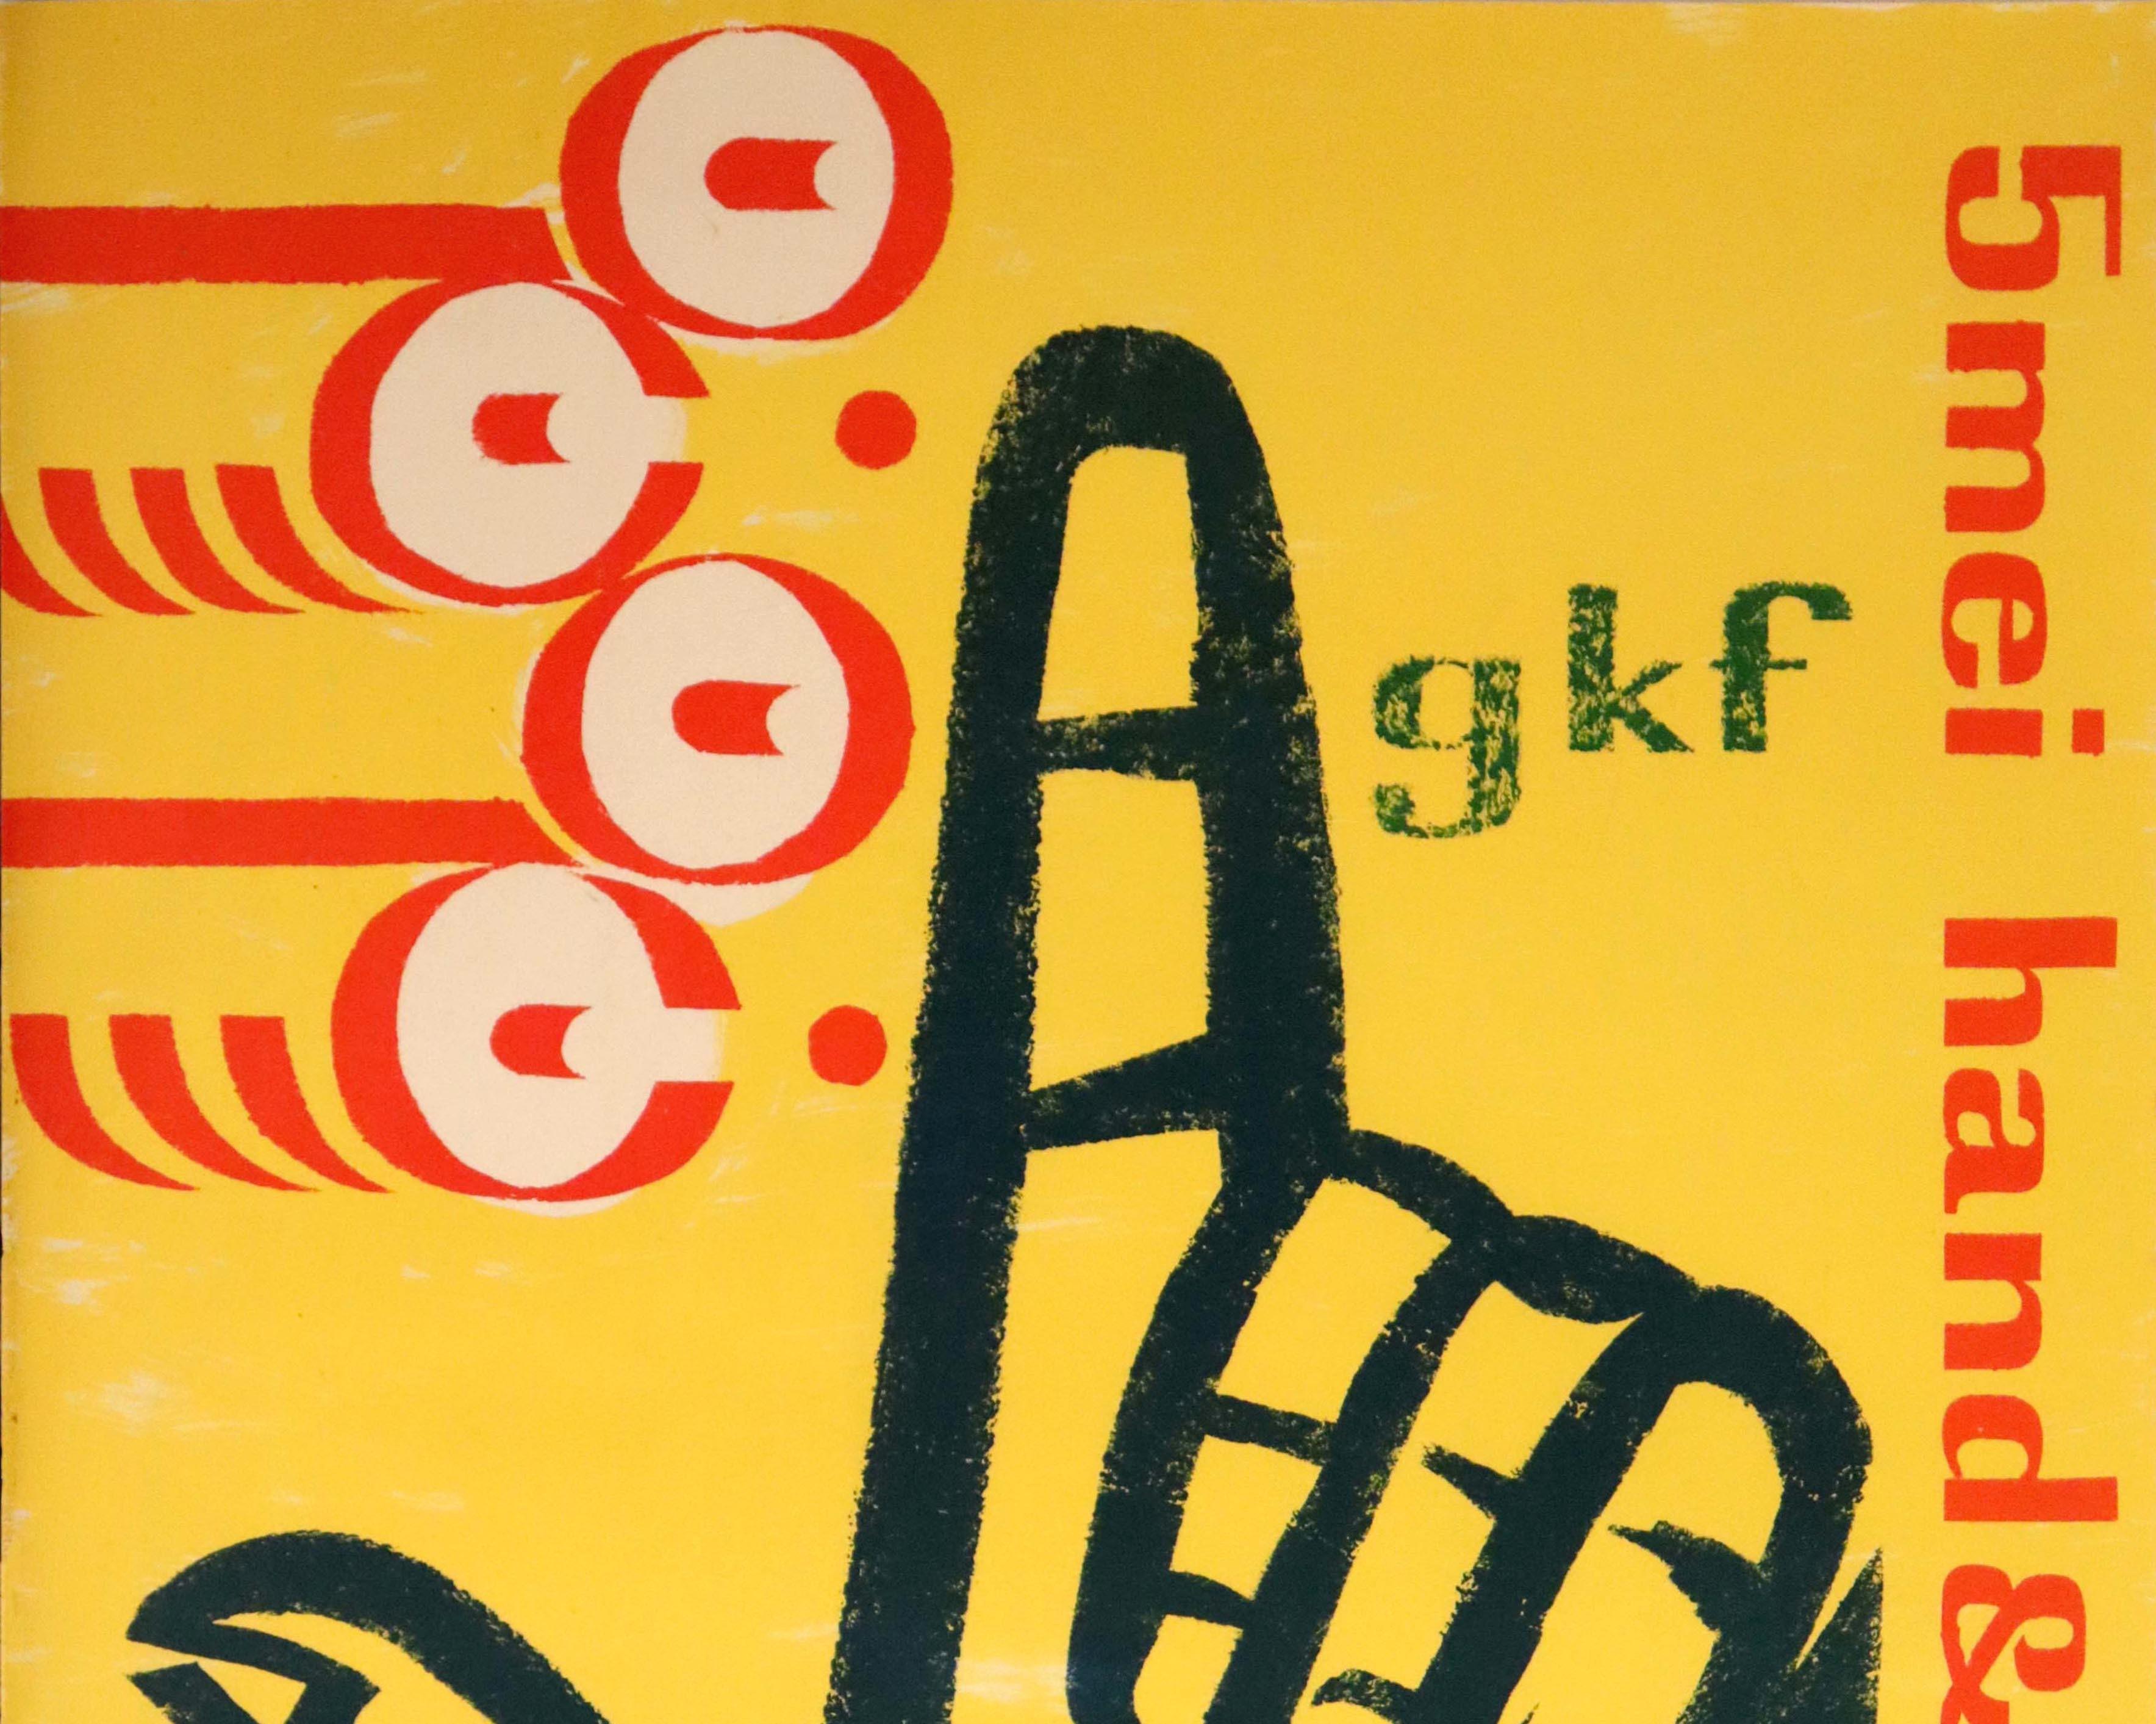 Original Vintage Poster For The GKF Exhibition Hand And Machine Stedelijk Museum - Print by Willem Sandberg